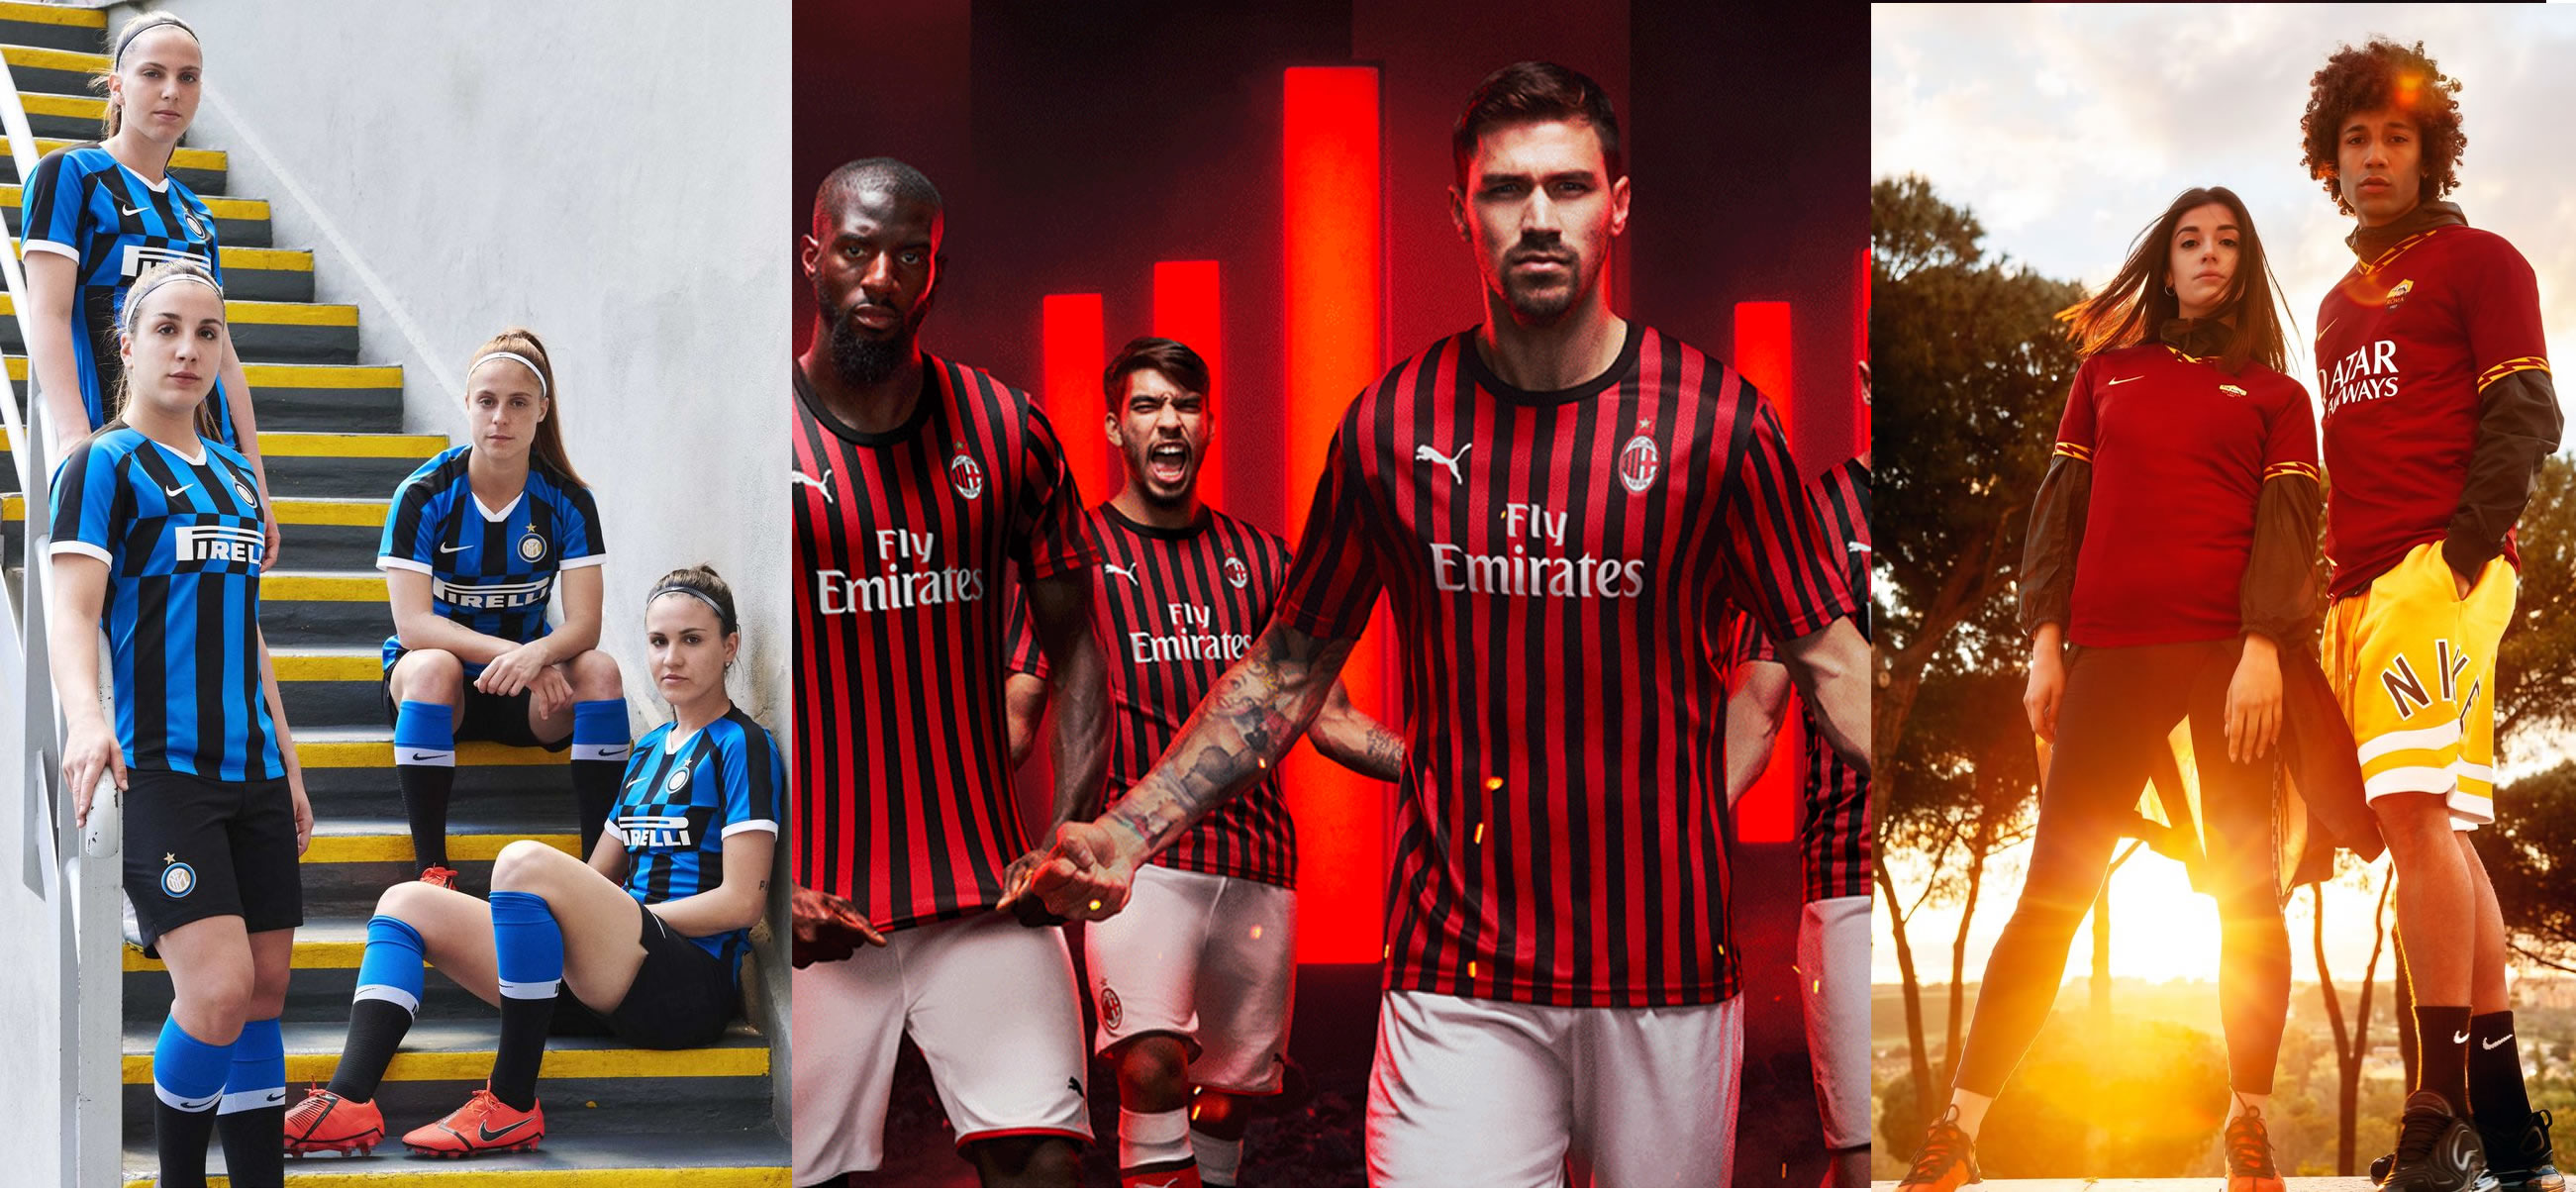 Inter Milan, AC Milan and AS Roma New Kits